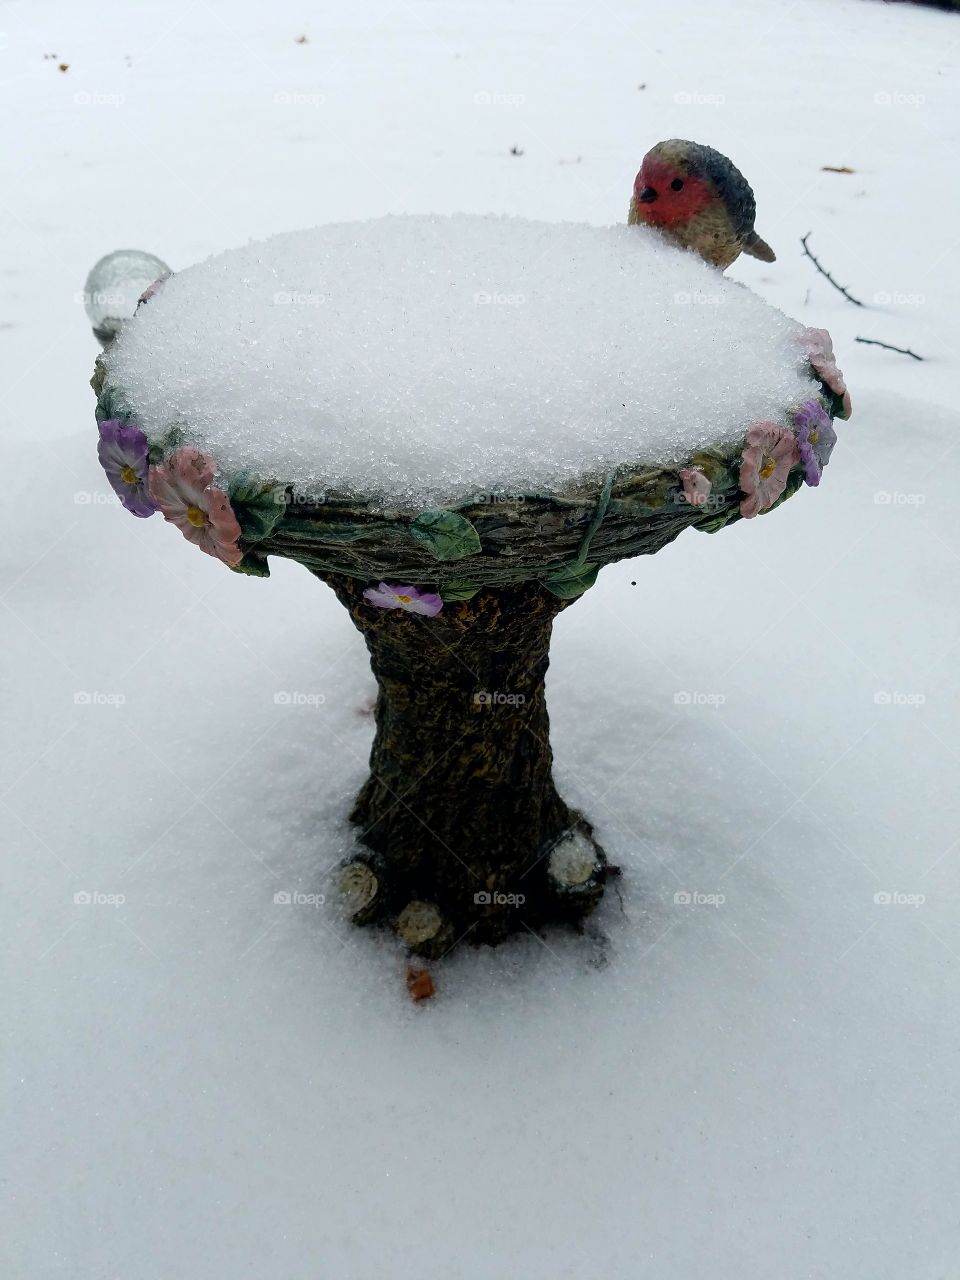 Snow on a birdbath sculpture